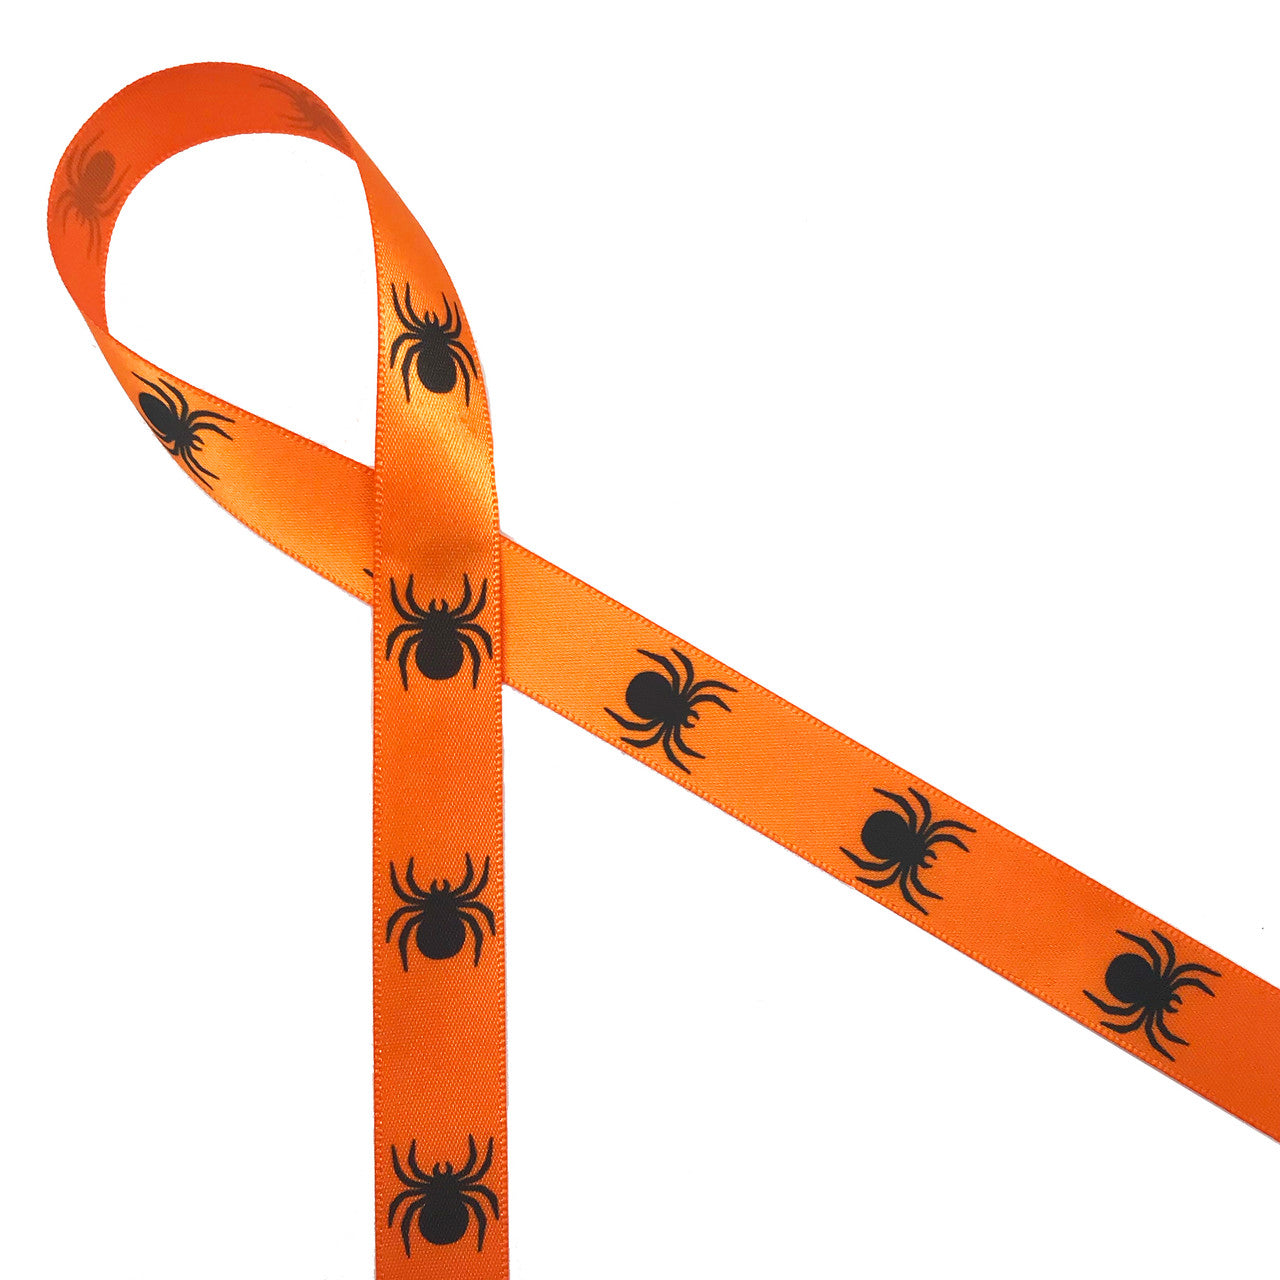 Spiders Ribbon printed on 5/8" tangerine single face satin